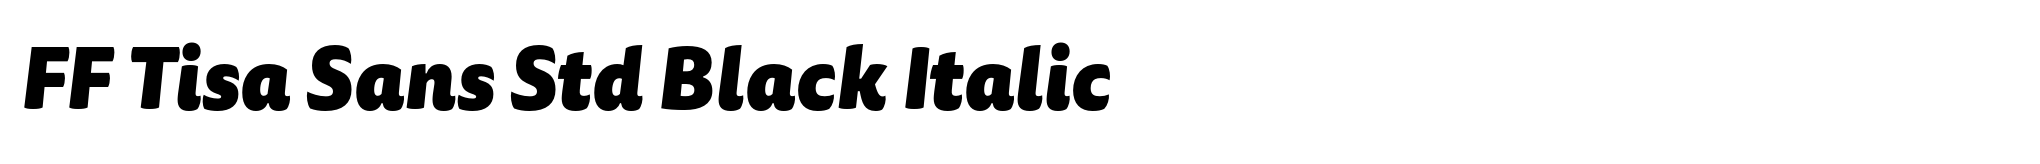 FF Tisa Sans Std Black Italic image